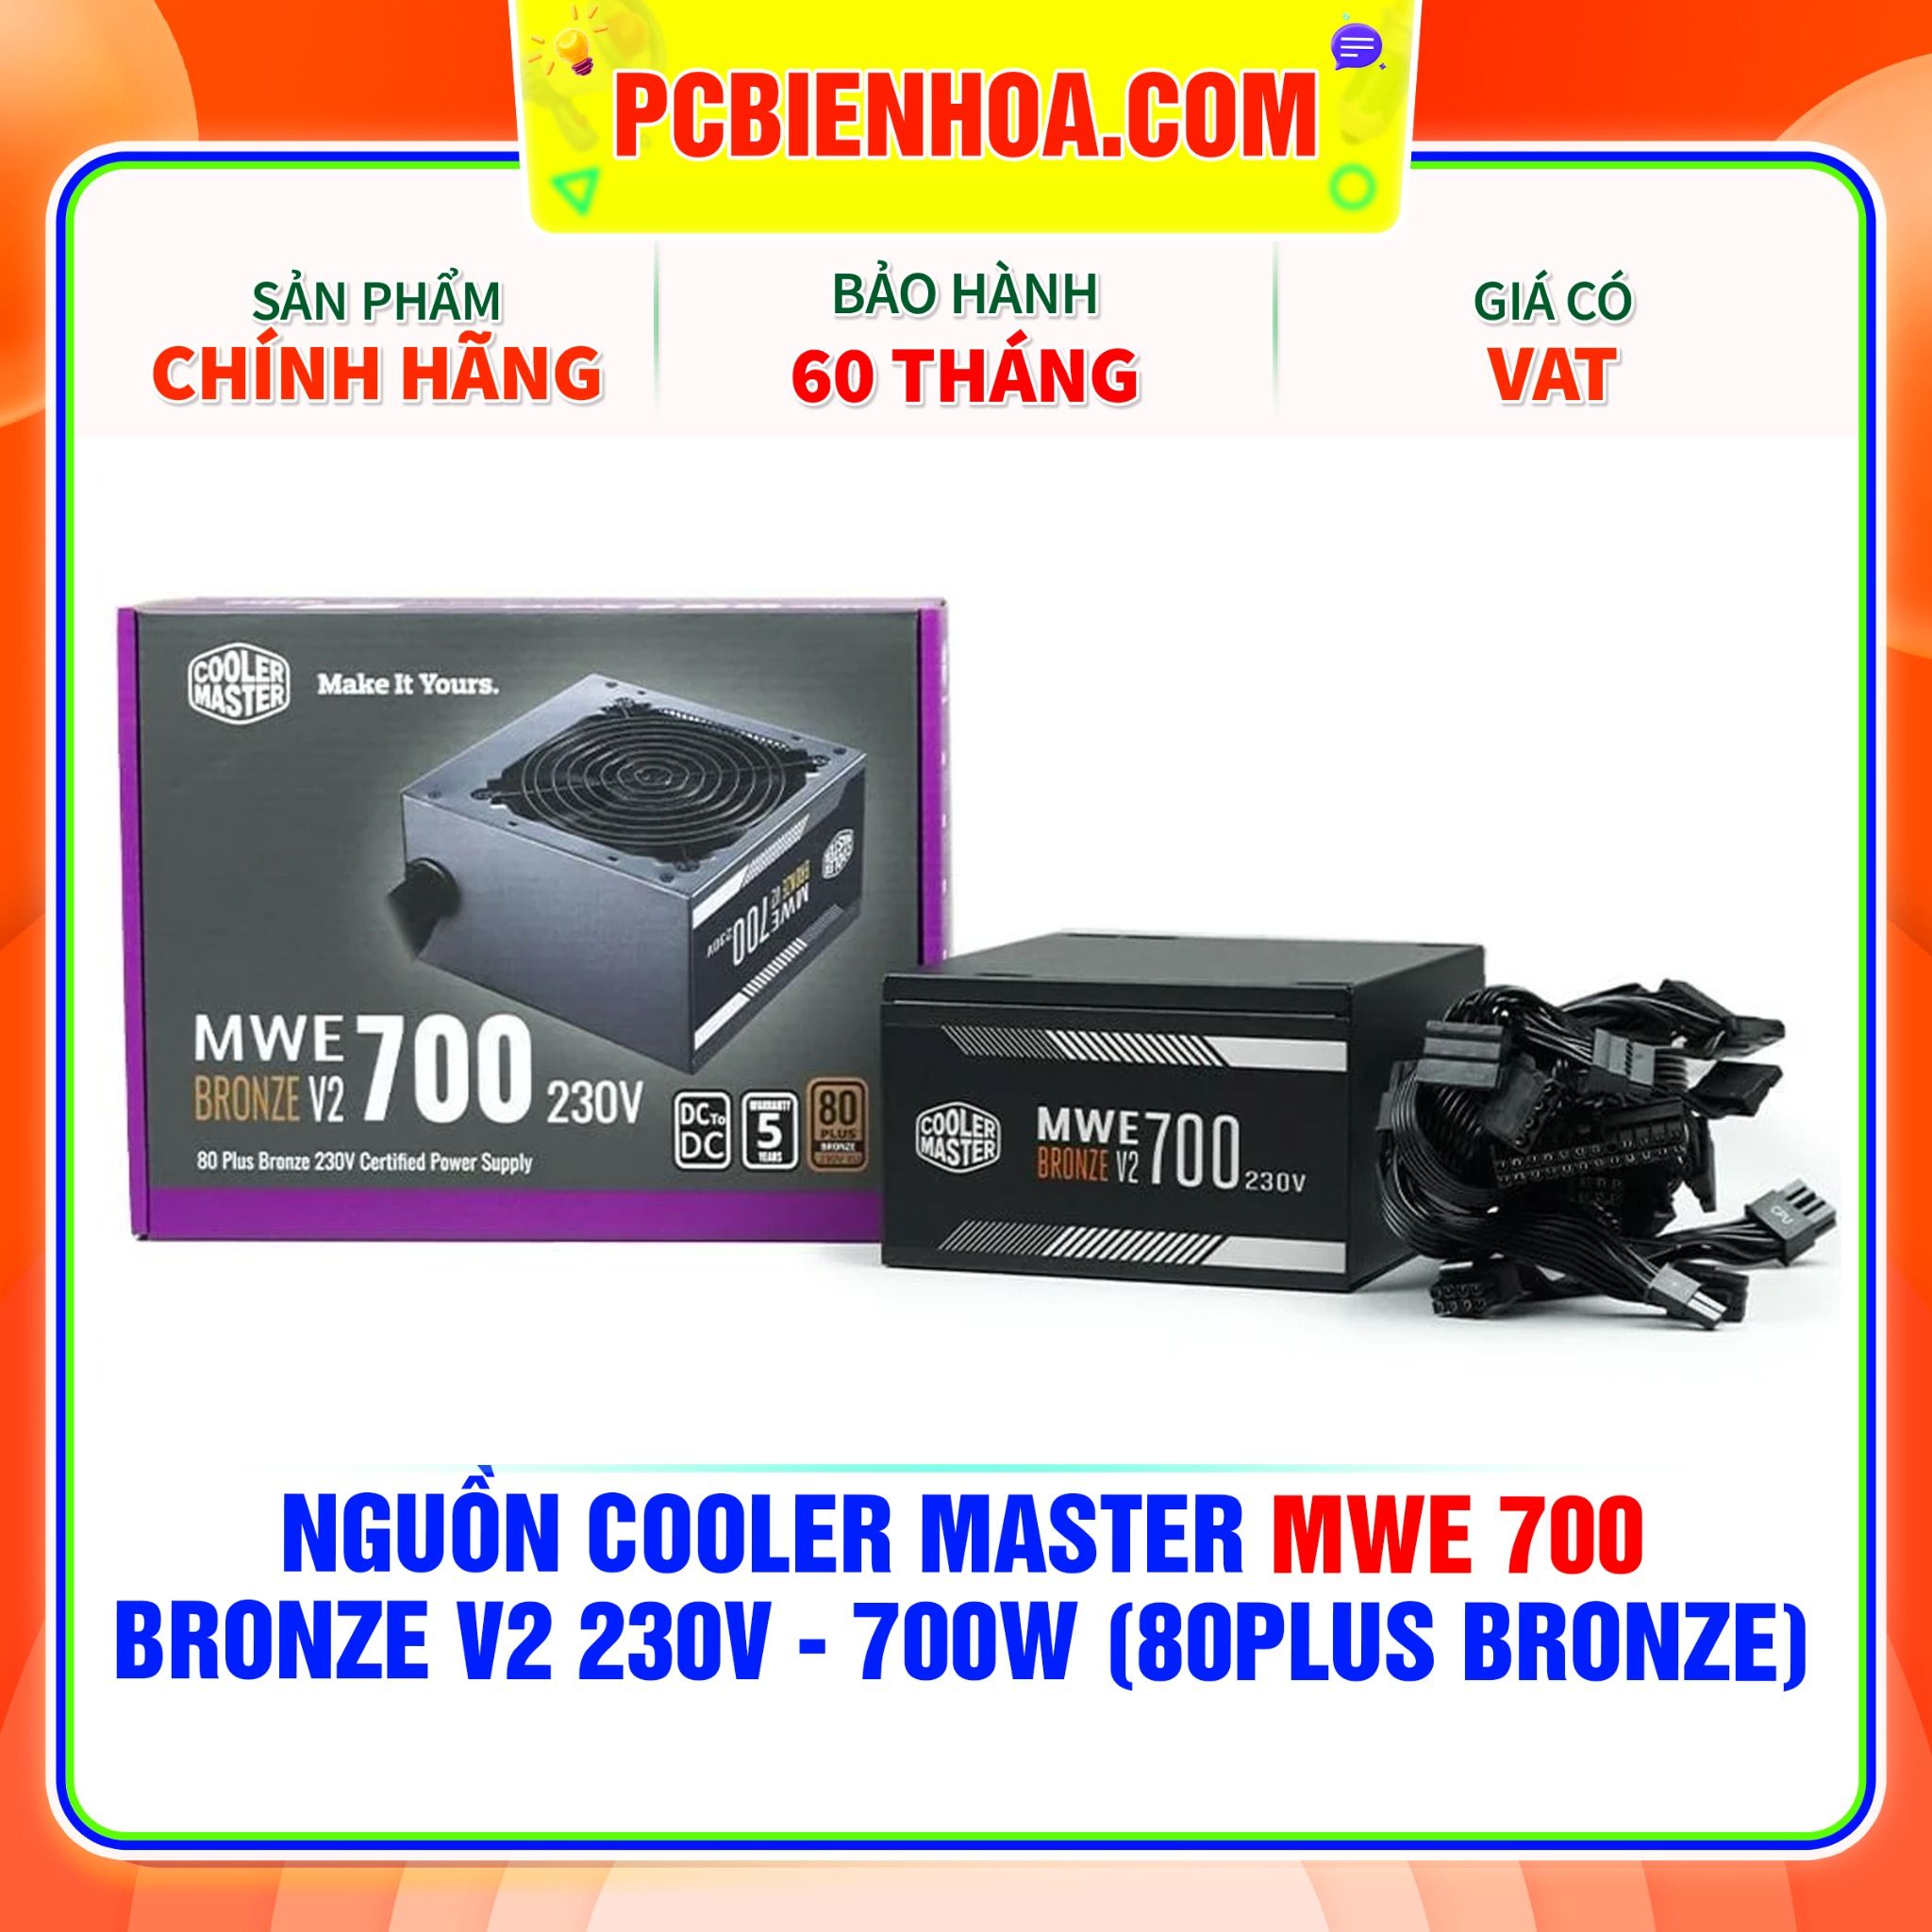  NGUỒN COOLER MASTER MWE 700 BRONZE V2 230V - 700W ( 80PLUS BRONZE ) 